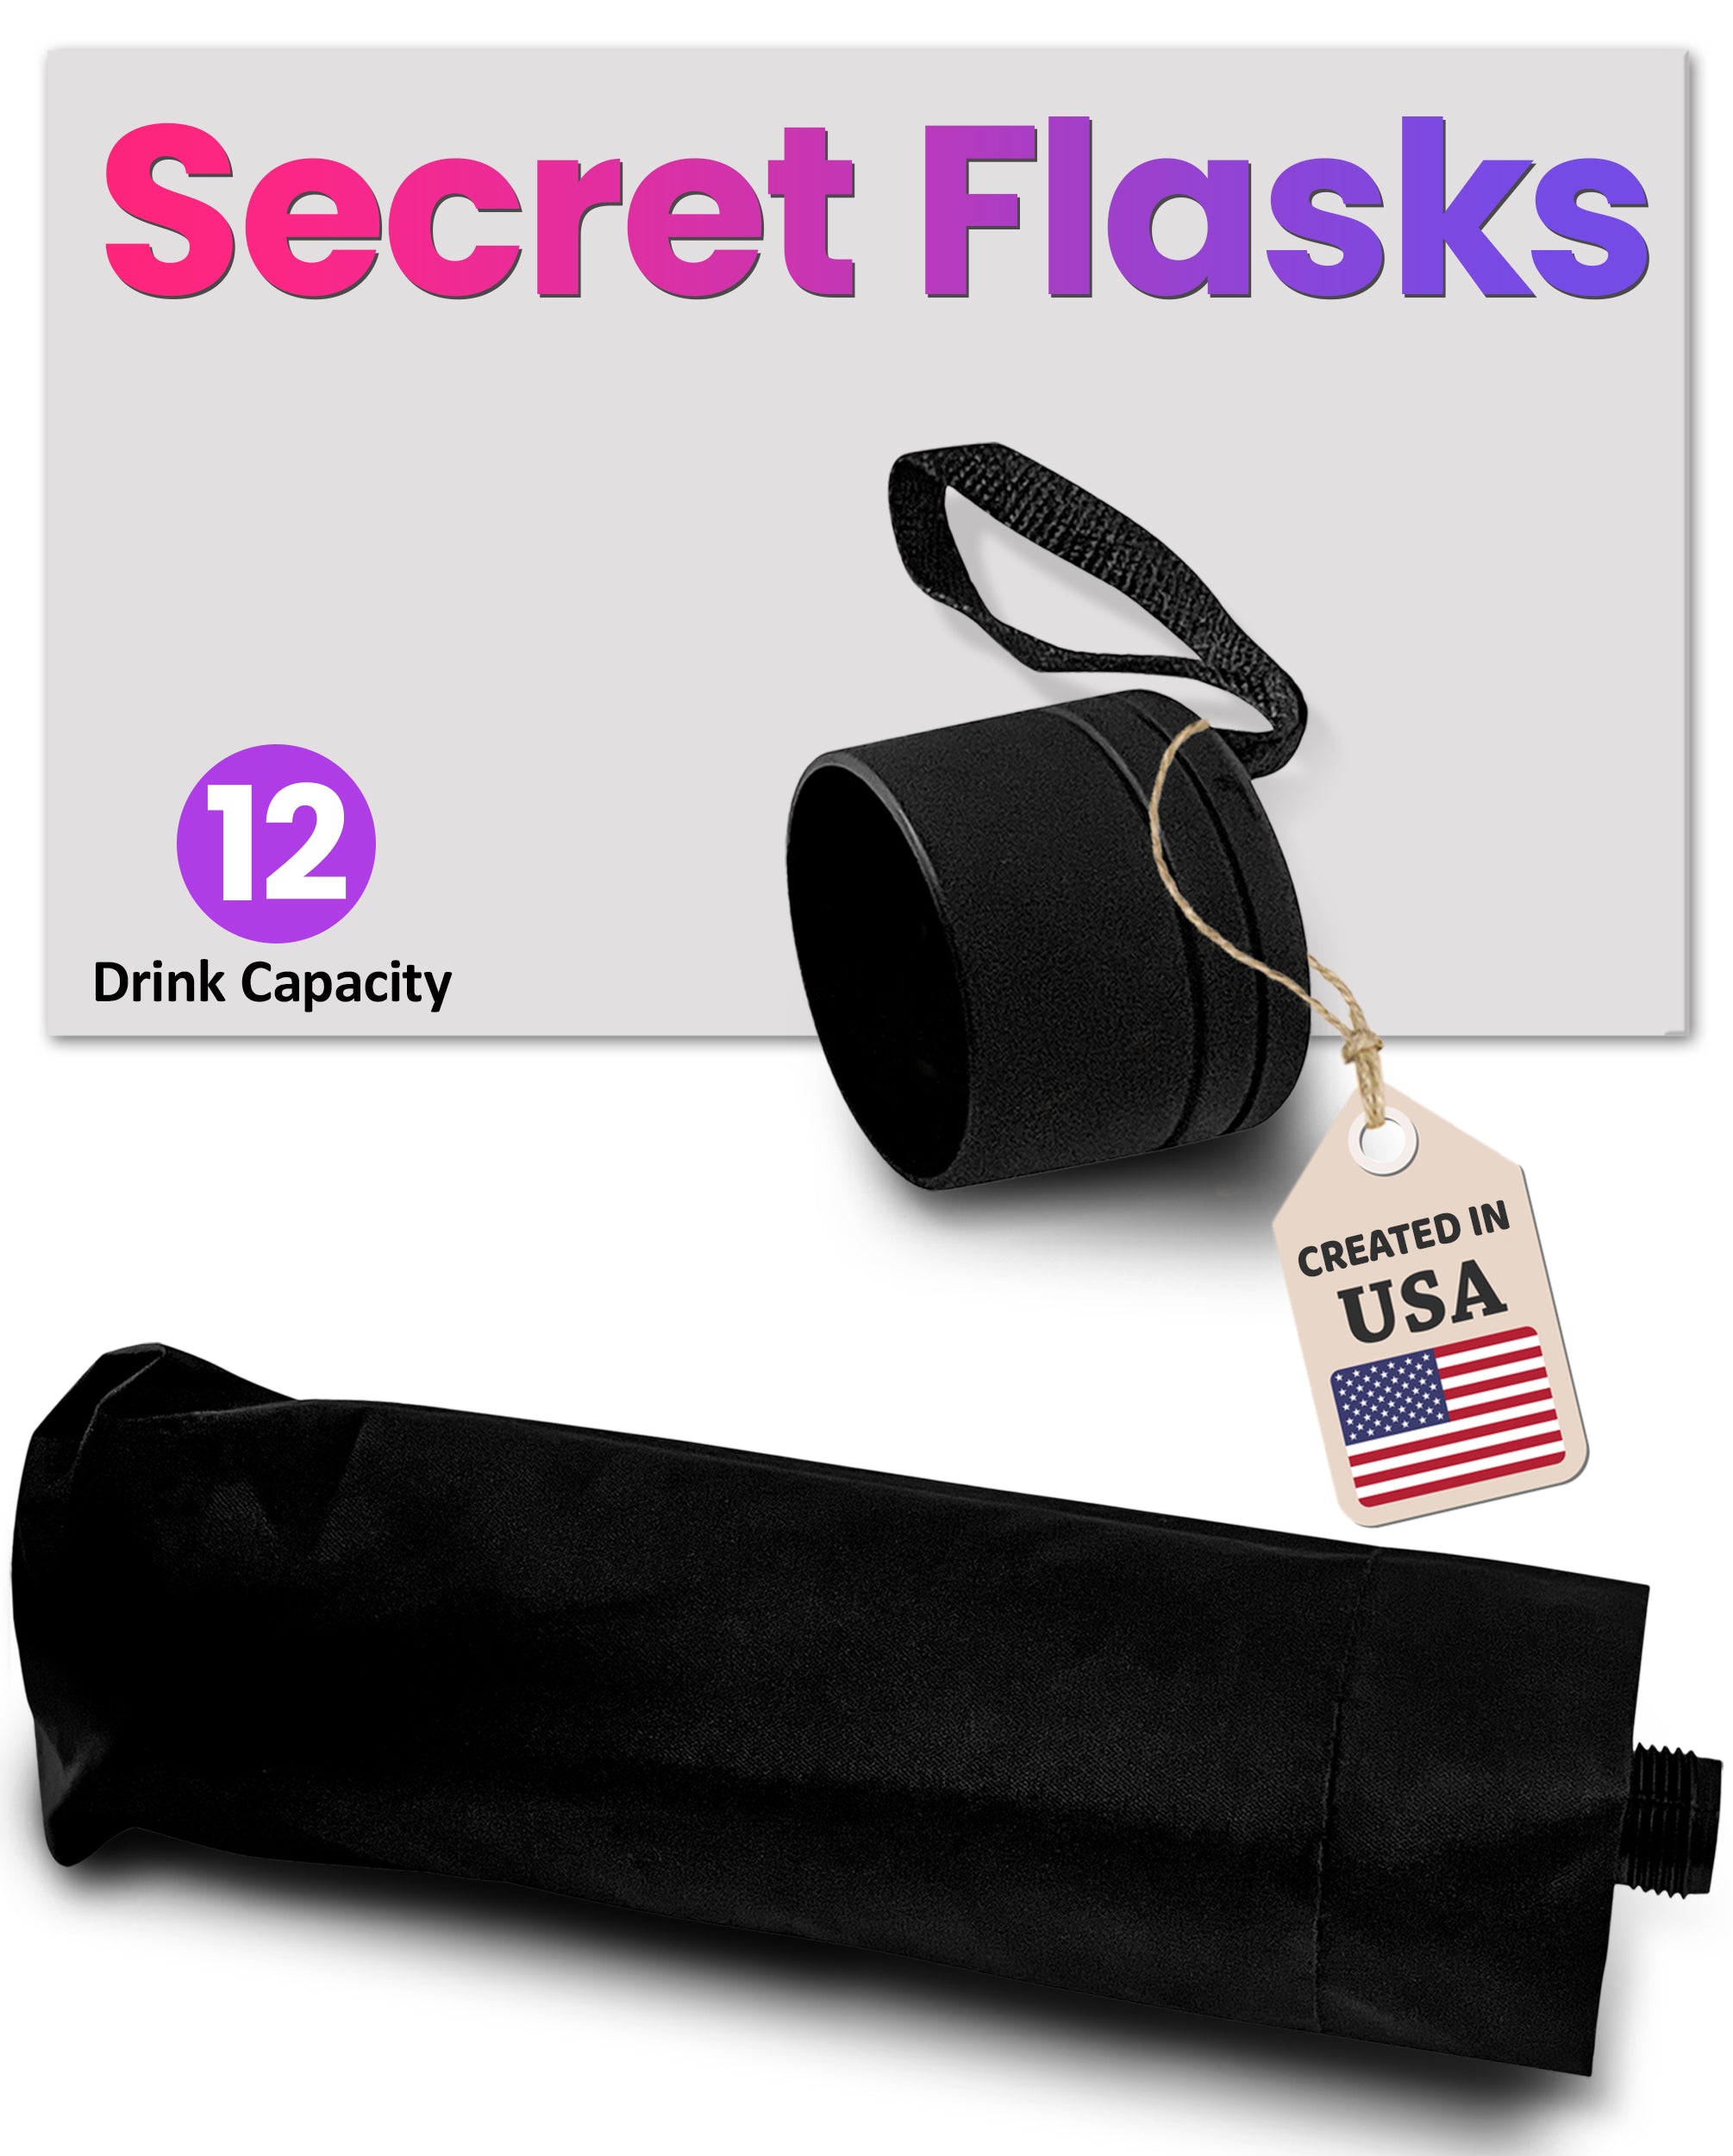 Secret Umbrella Flask - 6 Drink Capacity - Sneak Liquor Anywhere